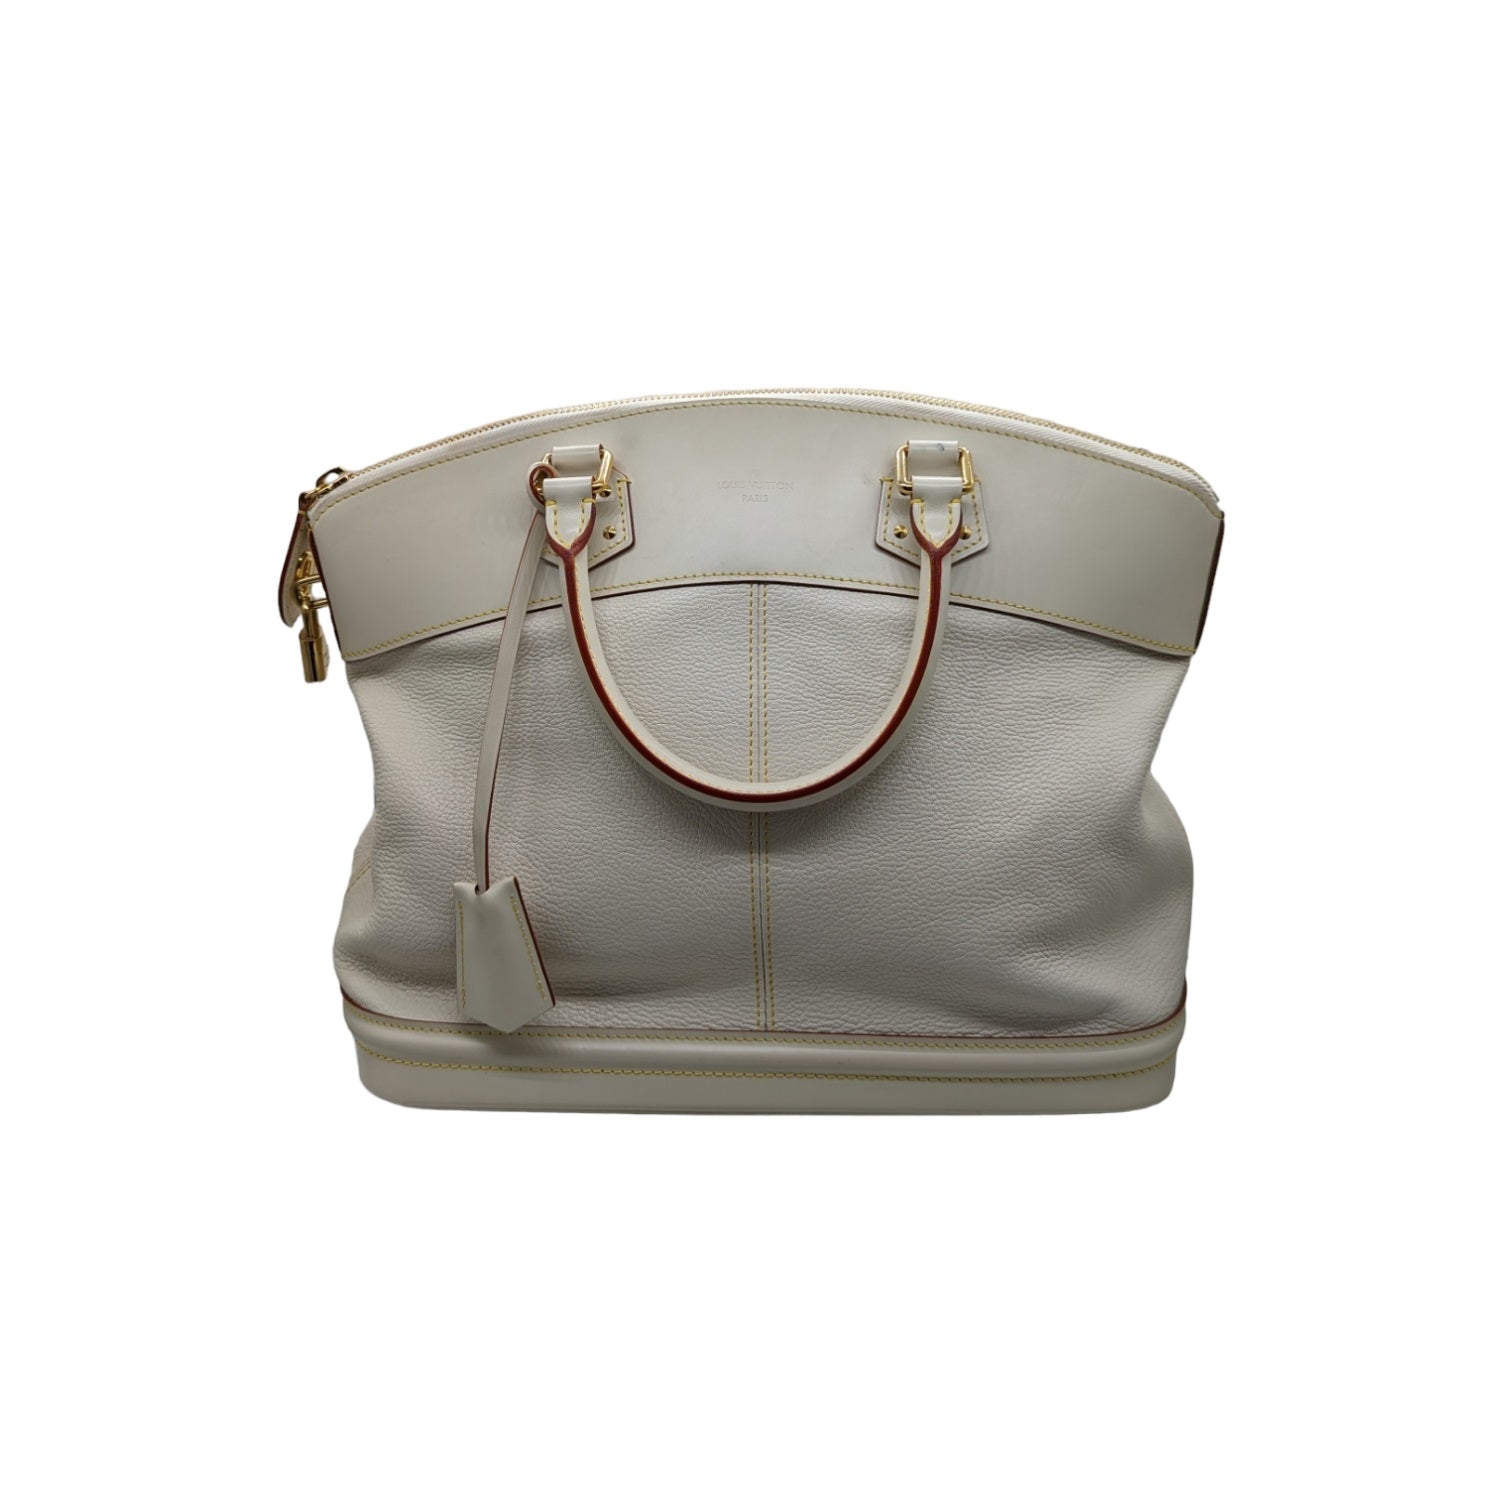 Louis Vuitton Suhali Lockit Handbag Leather Gm Auction